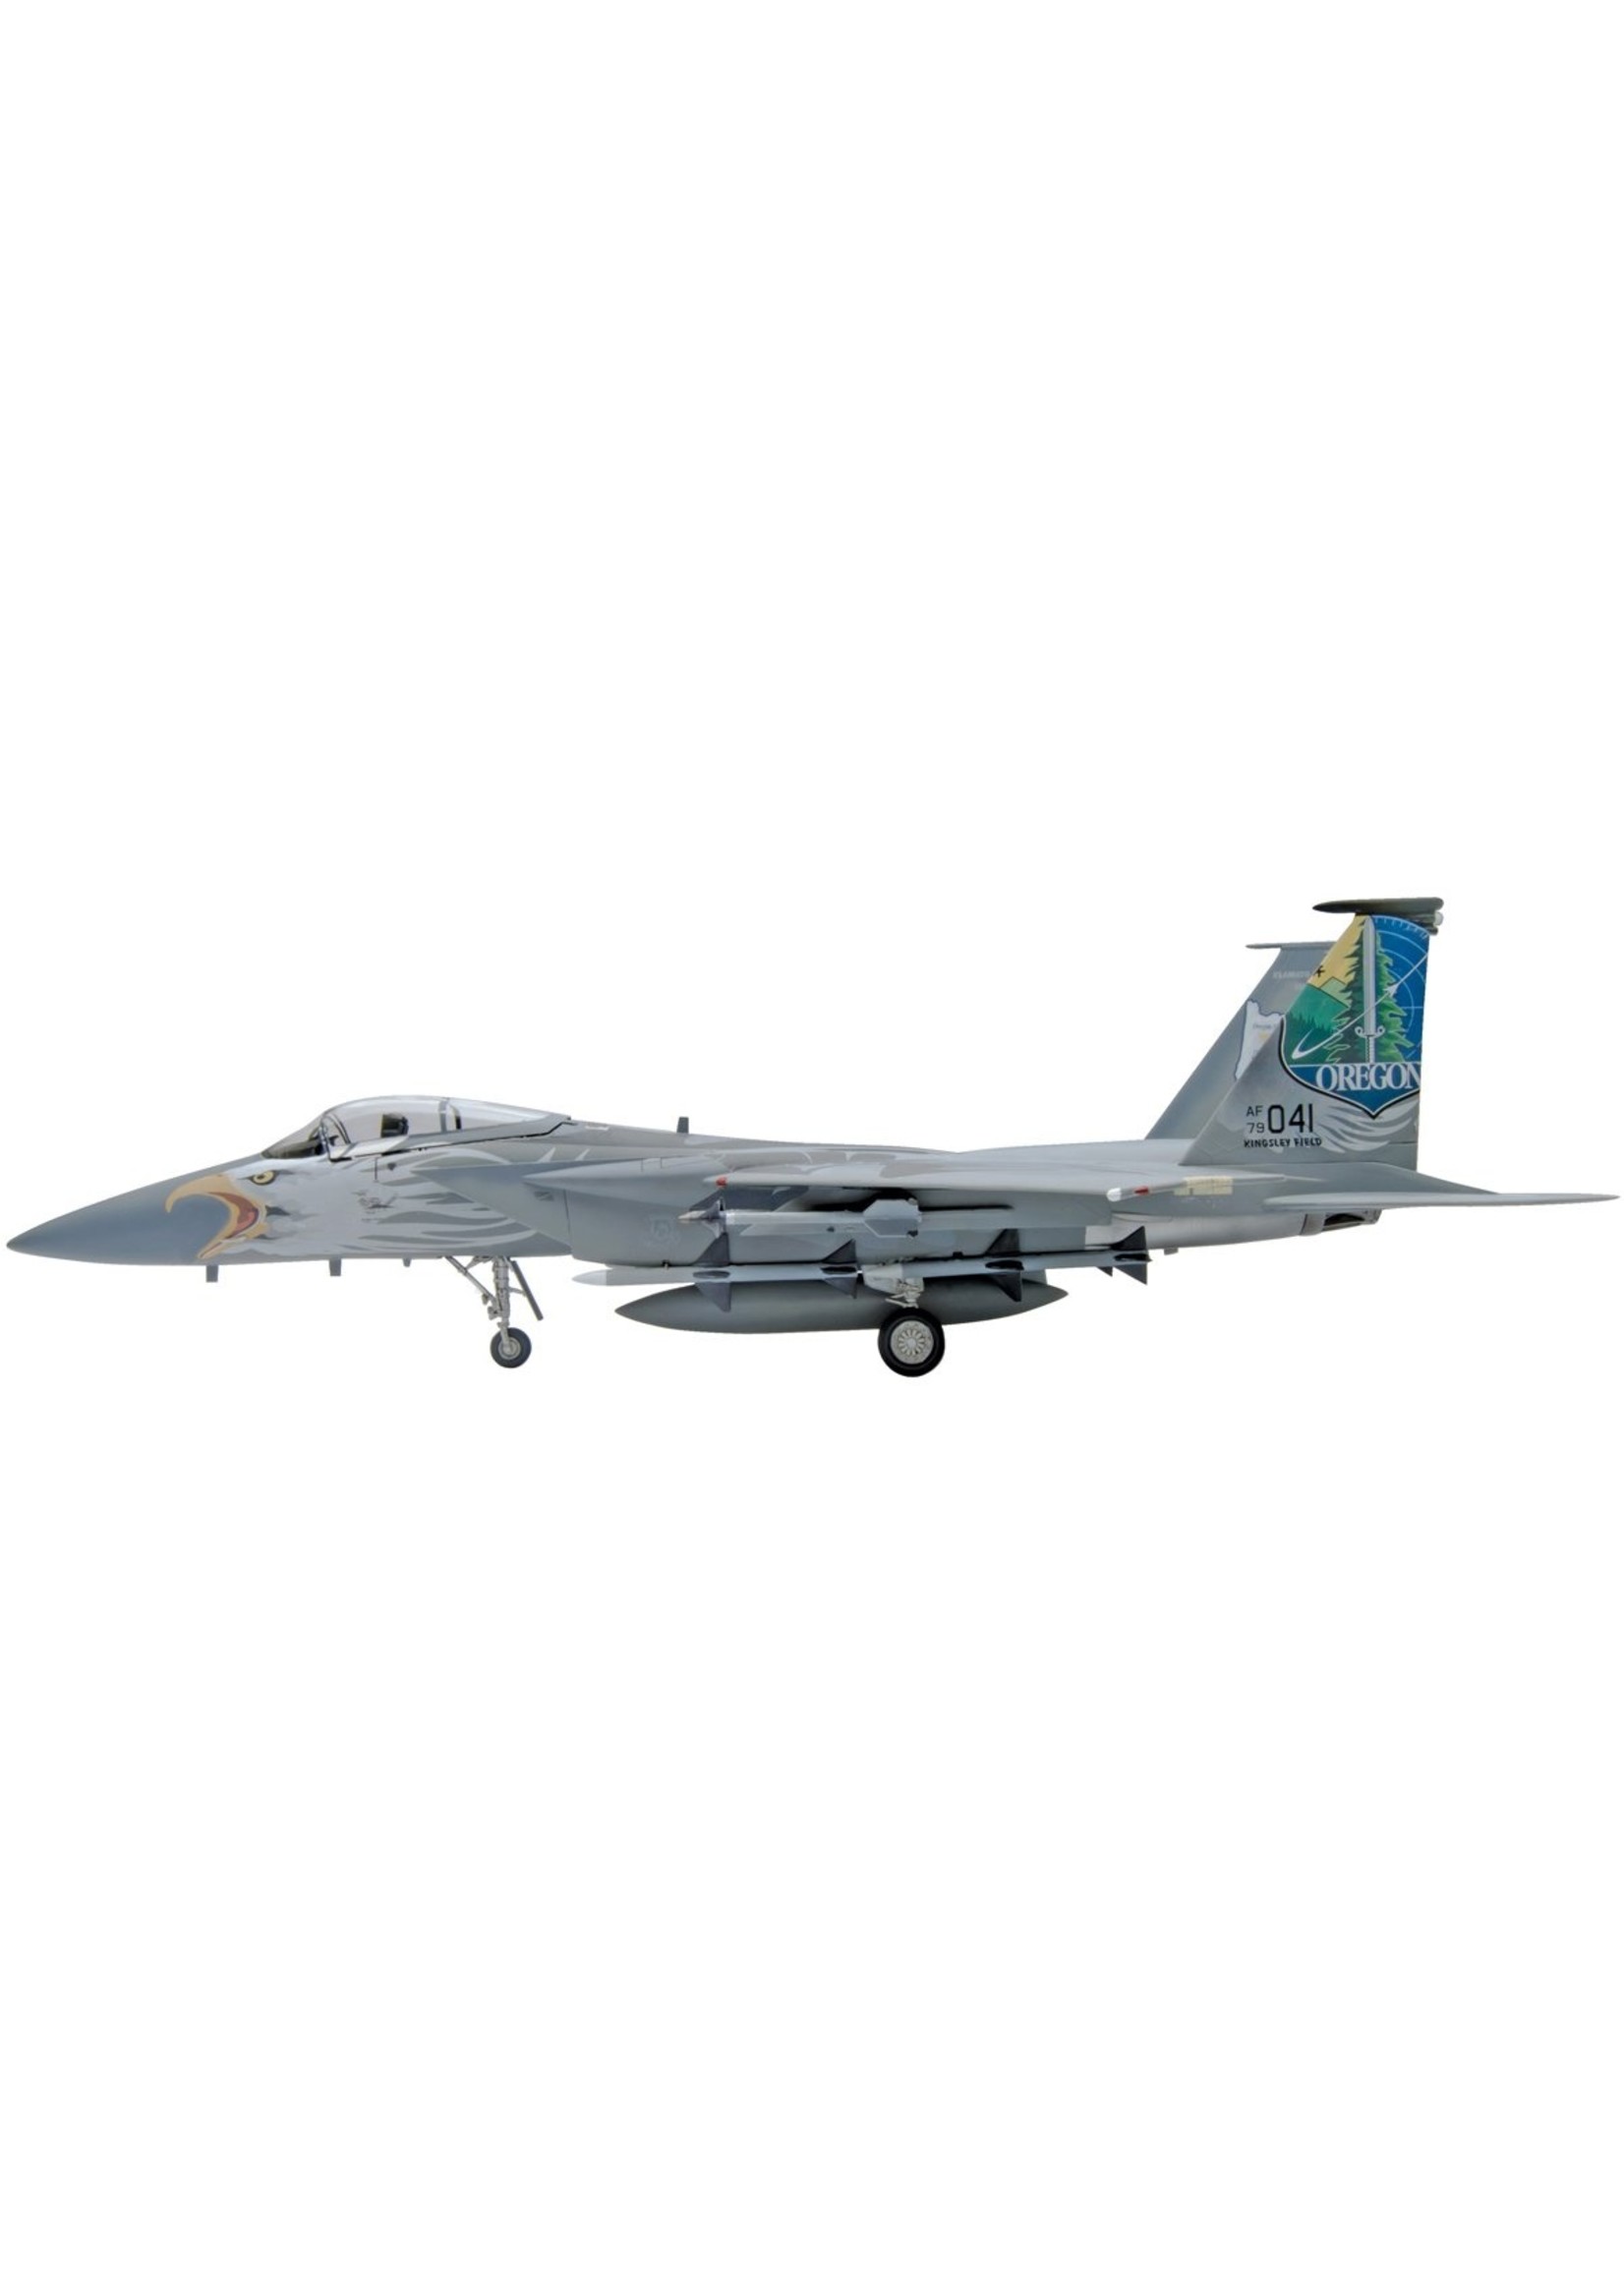 Revell 5870 - 1/48 F-15C Eagle